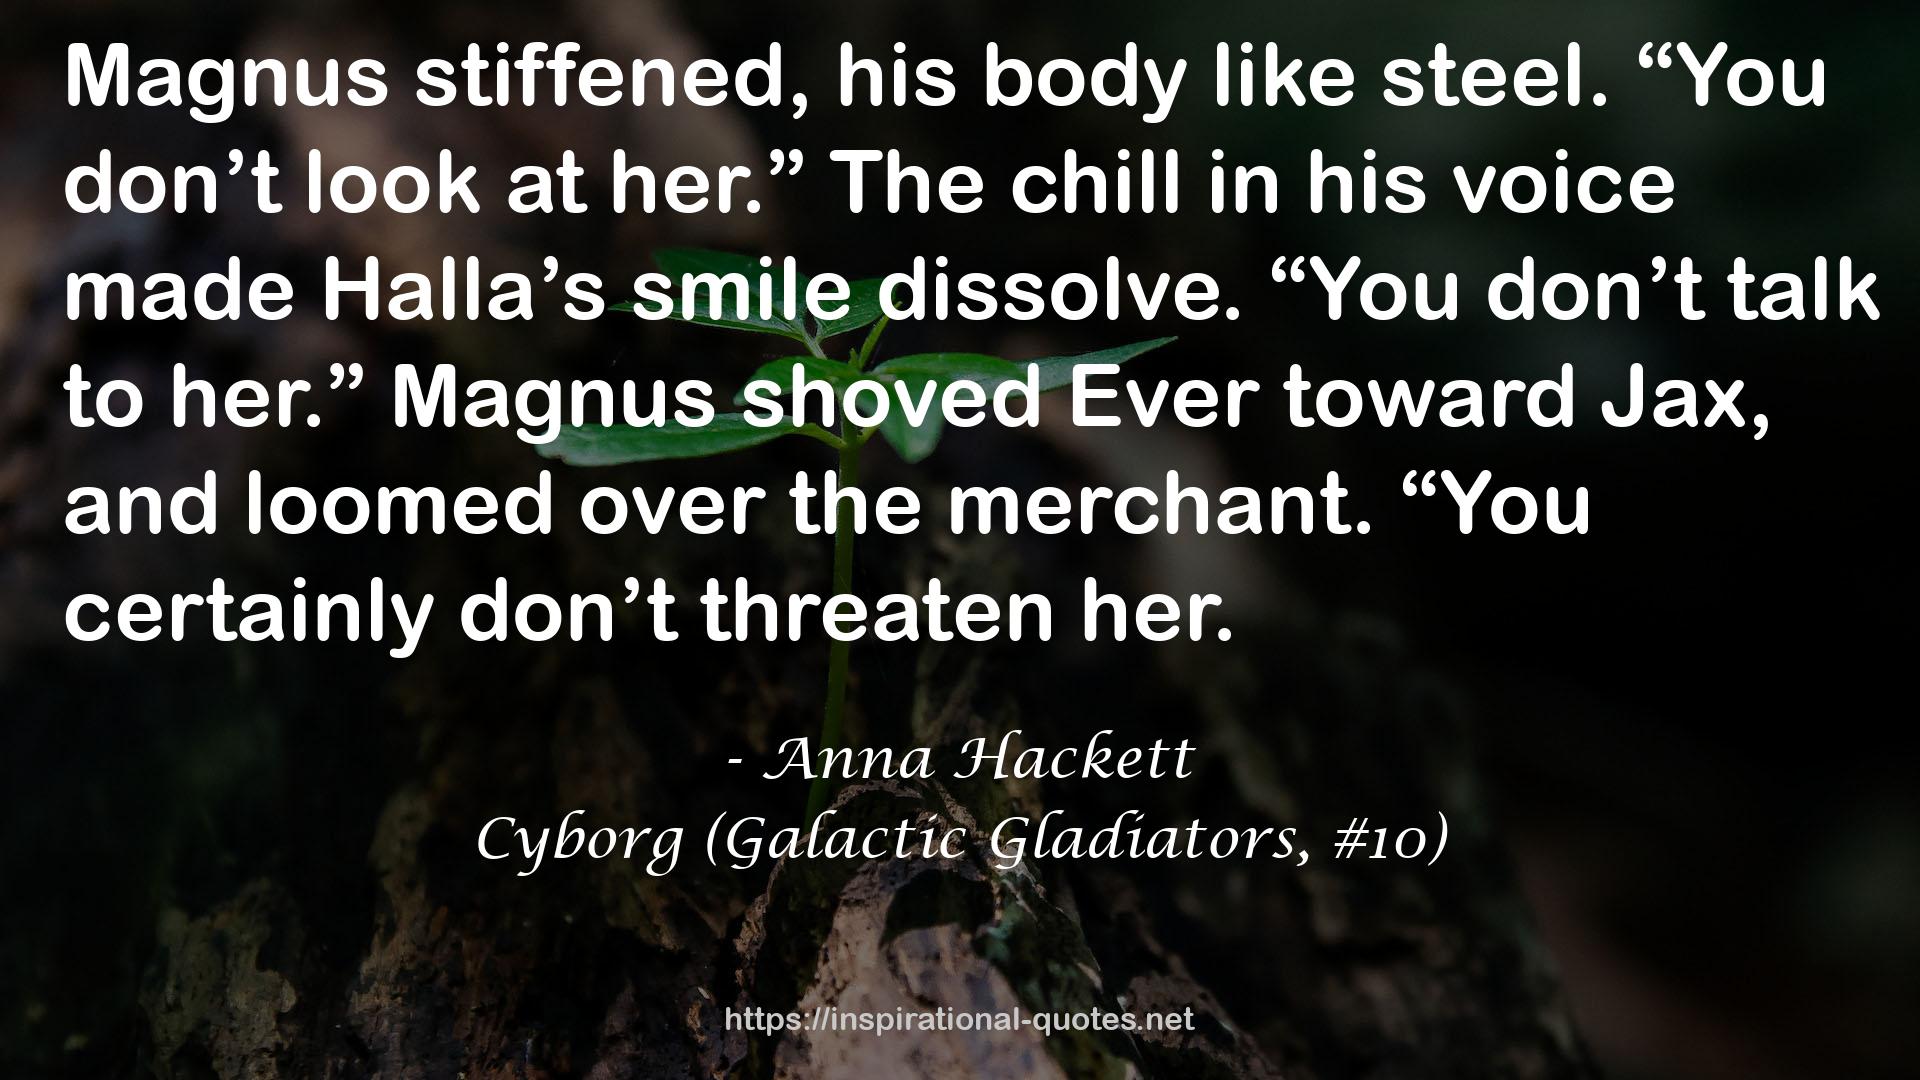 Cyborg (Galactic Gladiators, #10) QUOTES